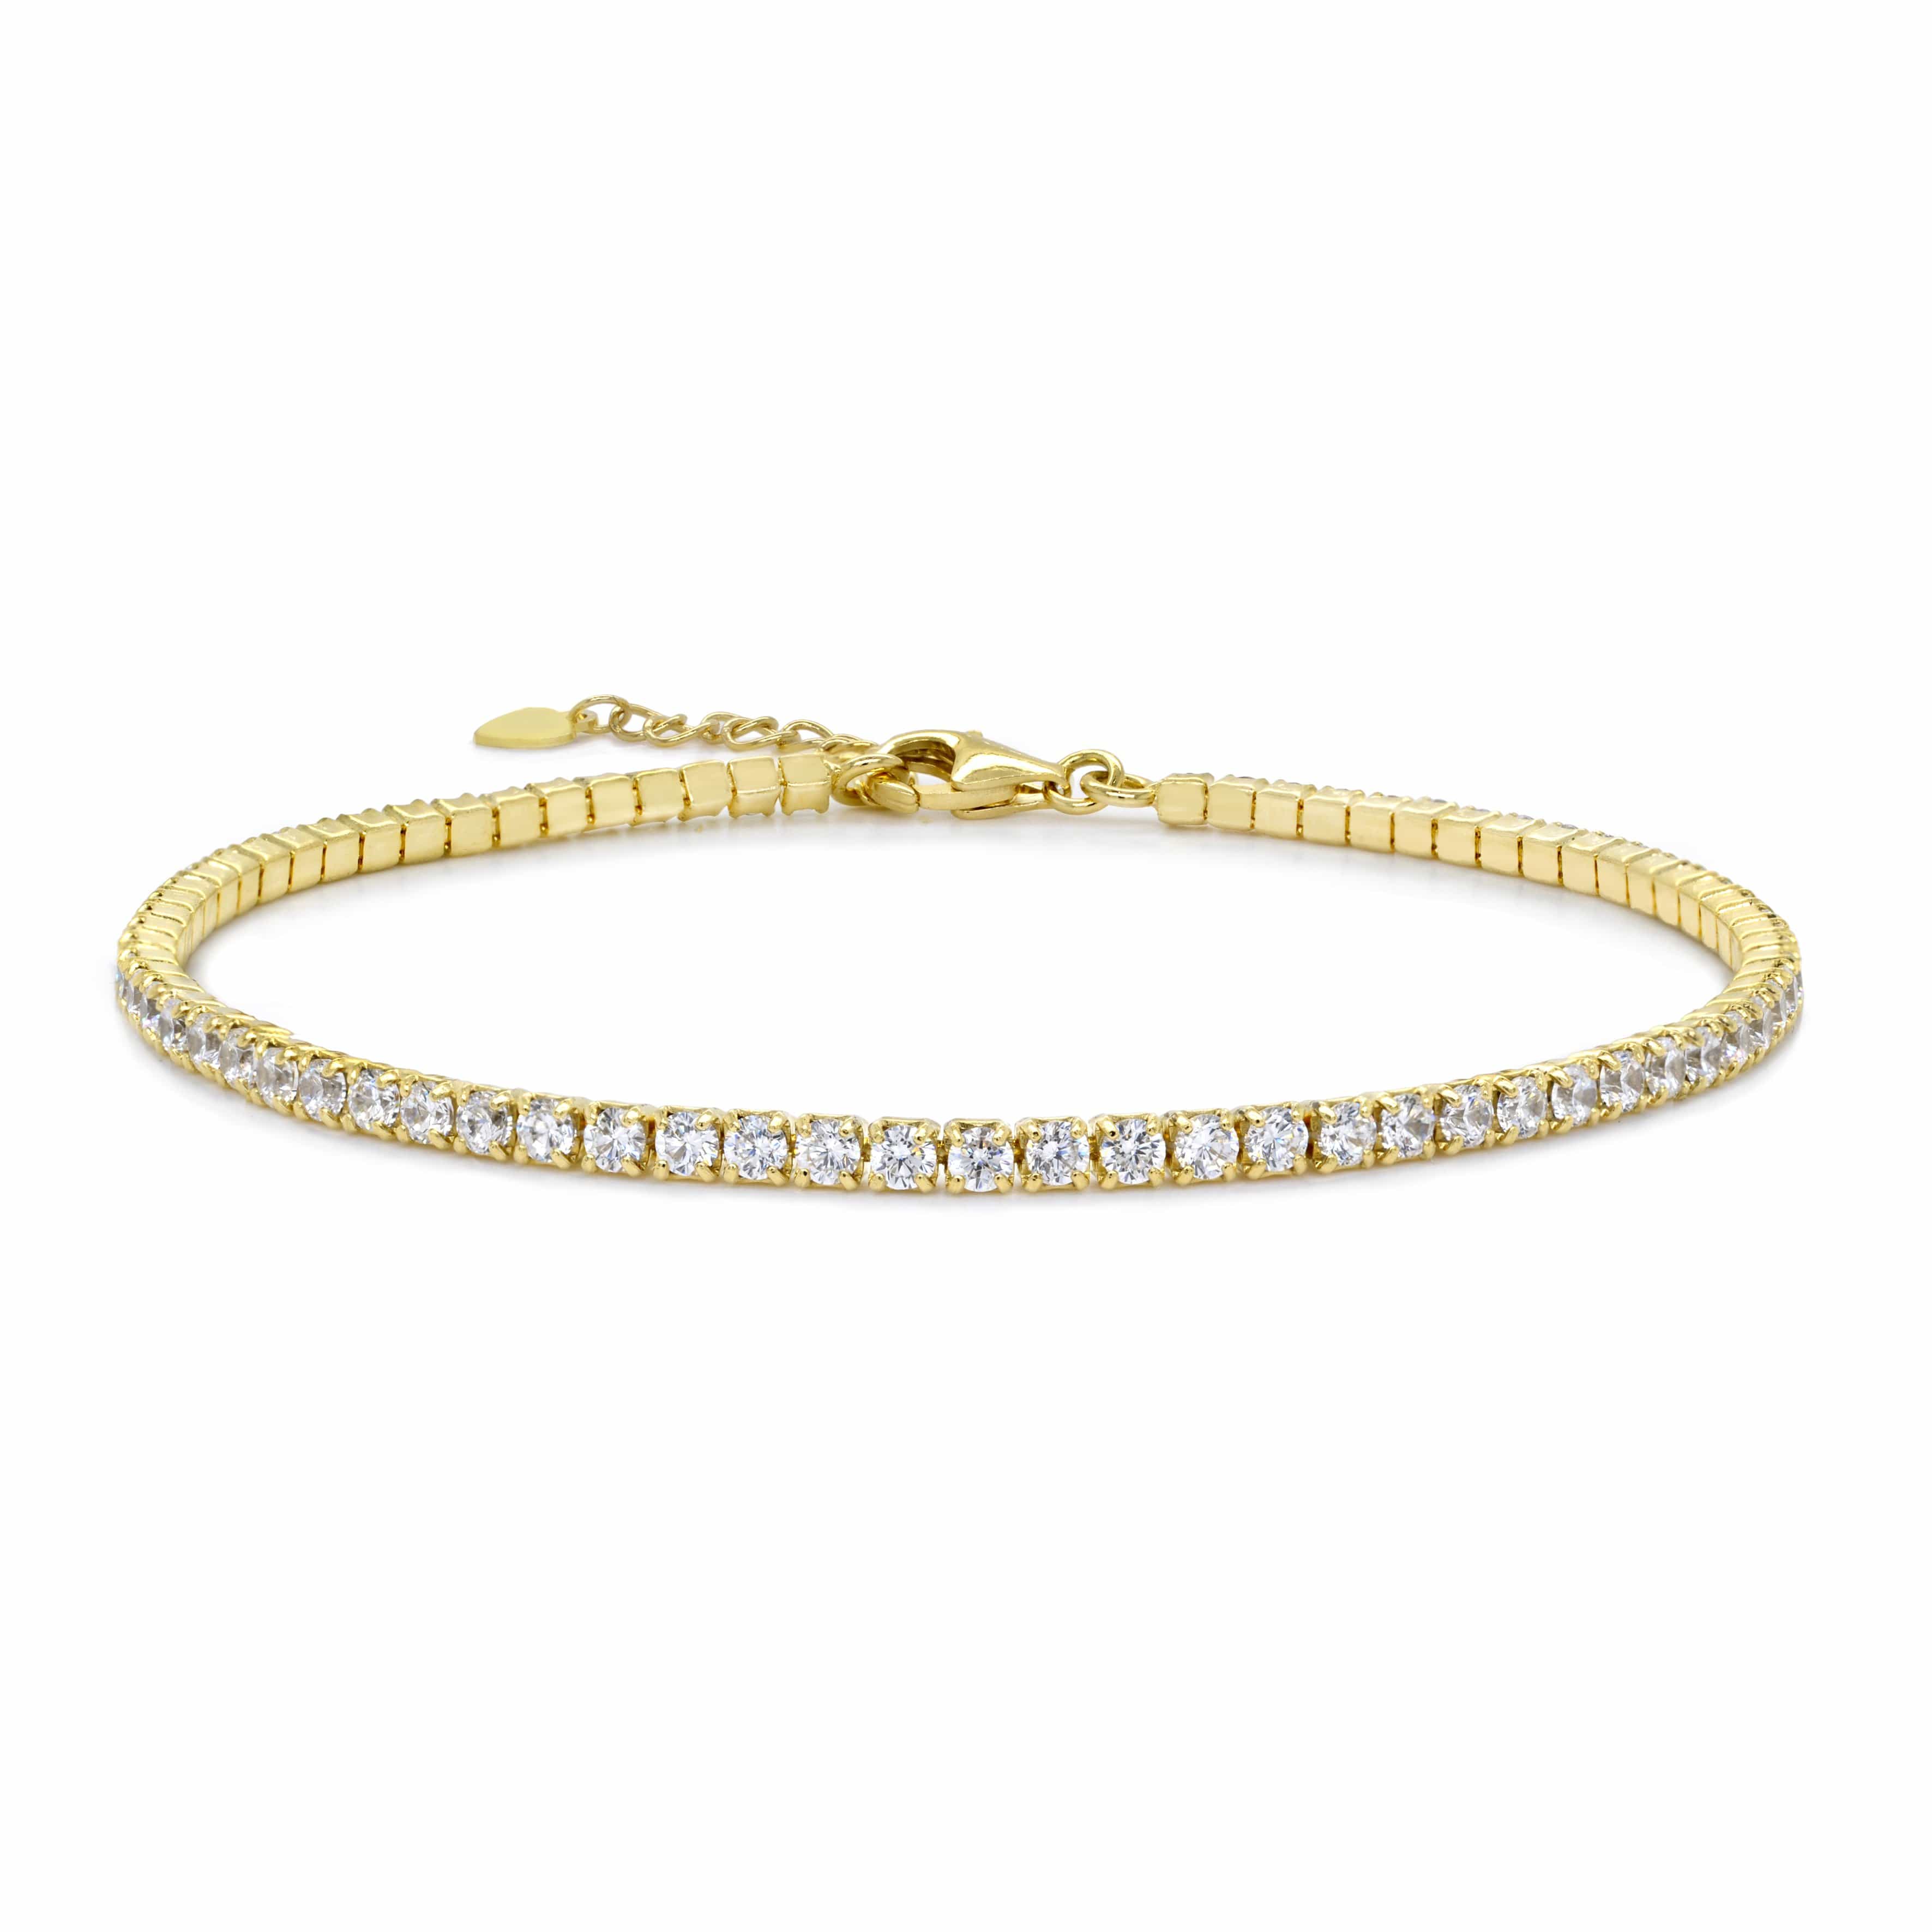 Lynora Jewellery Bracelet 7.5" / Yellow Gold Plate / Clear Tennis Bracelet Yellow Gold Plate